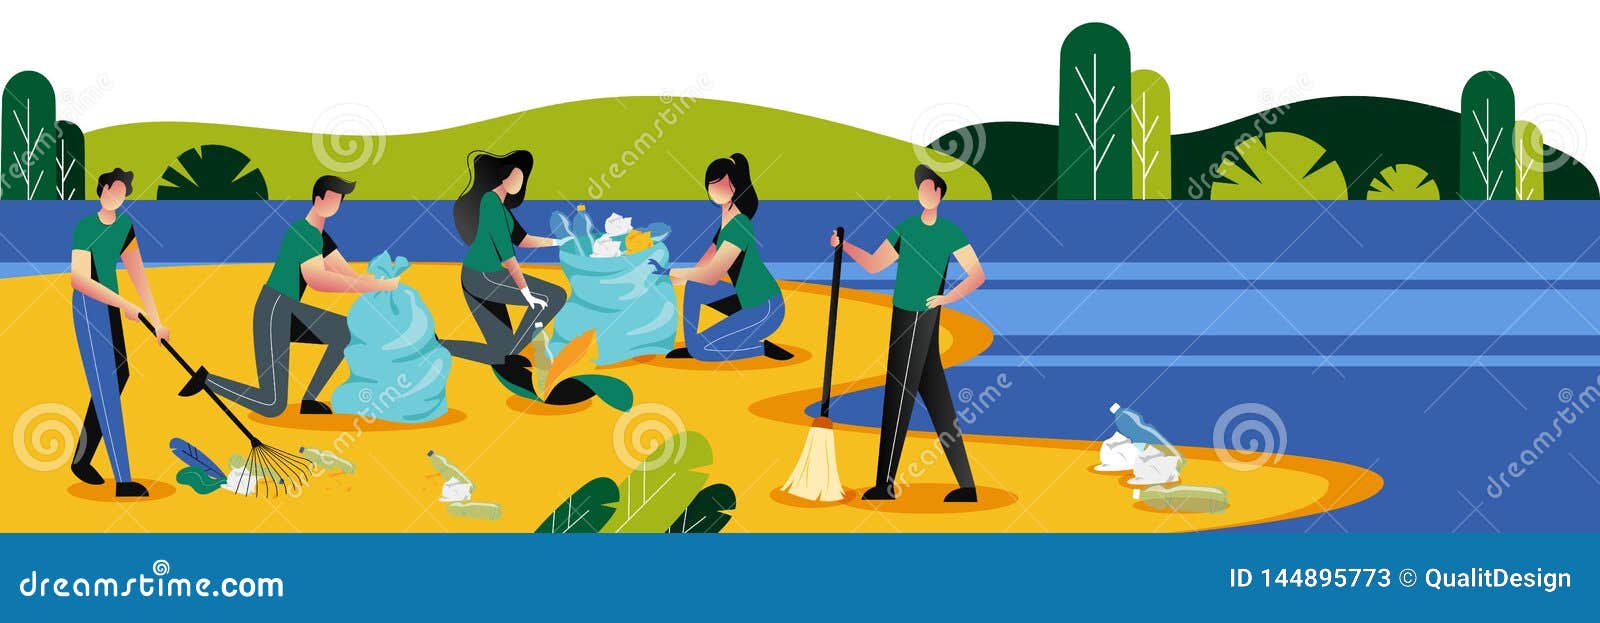 People Cleaning Plastic Garbage on Waterfront. Volunteering, Ecology ...